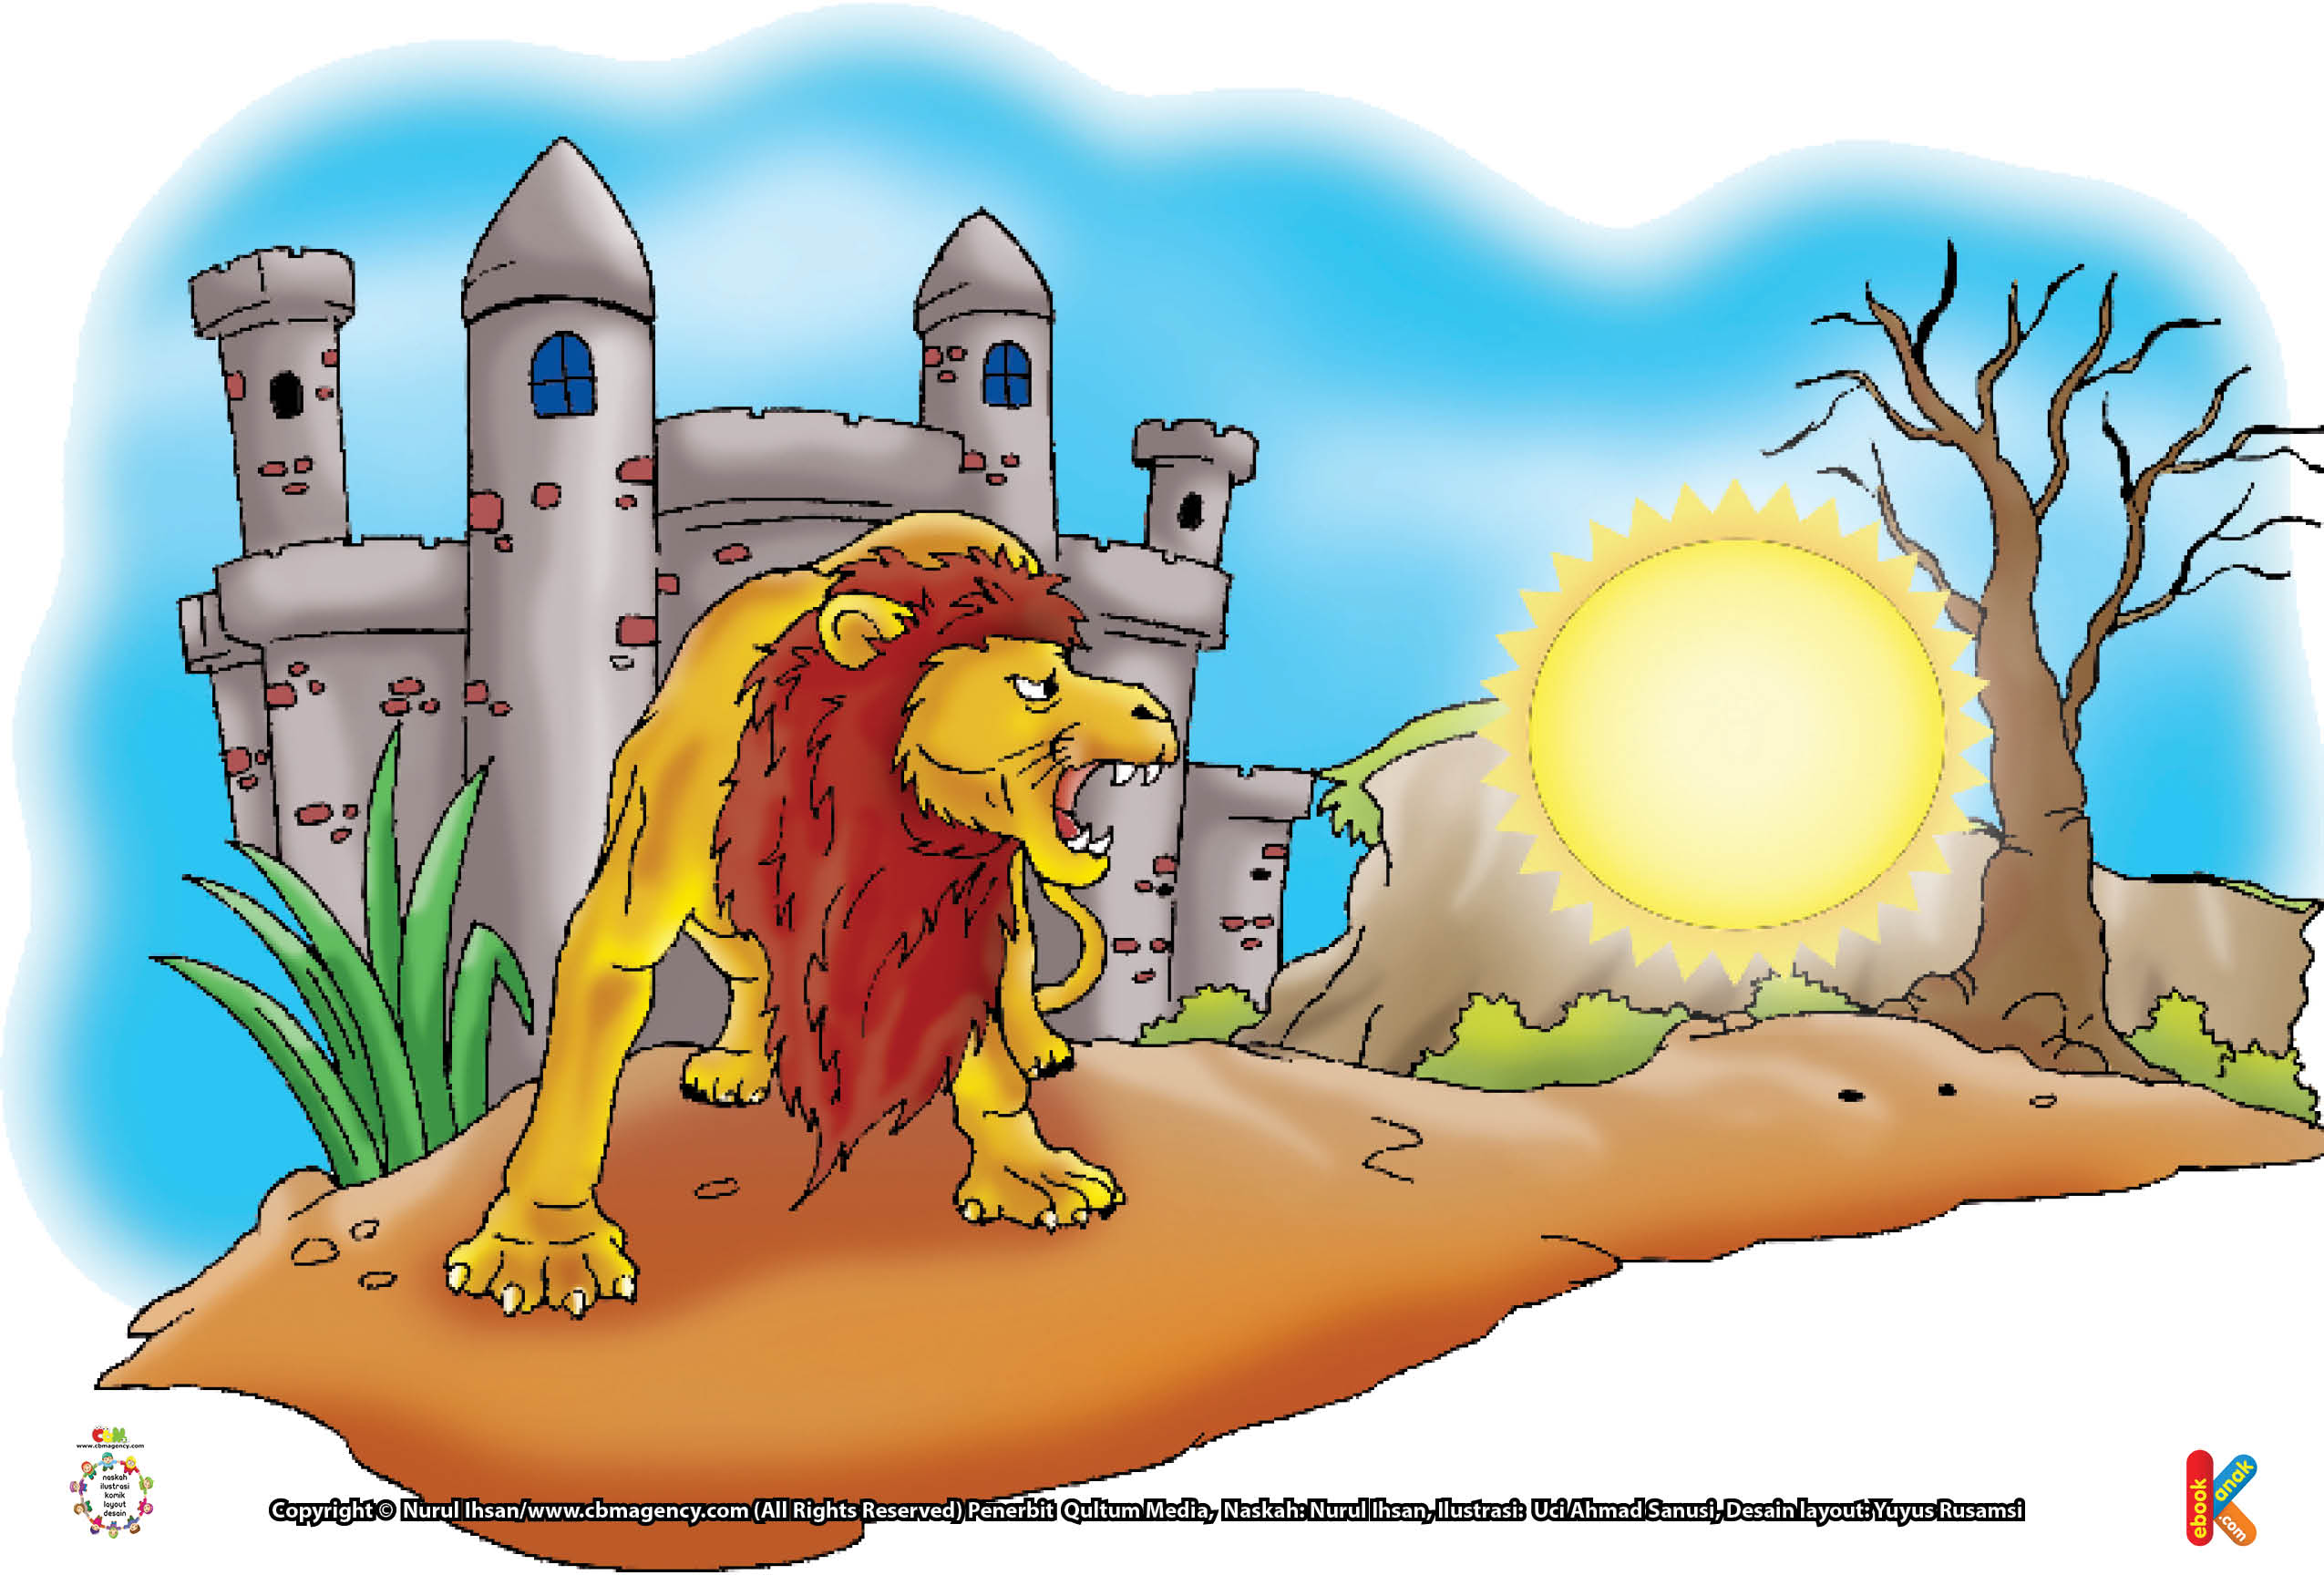 Singa yang pintar dan terlatih itu langsung menerkam Hasyim bin Utbah. Hasyim bin Utbah dengan sigap menikam singa itu hingga mati.